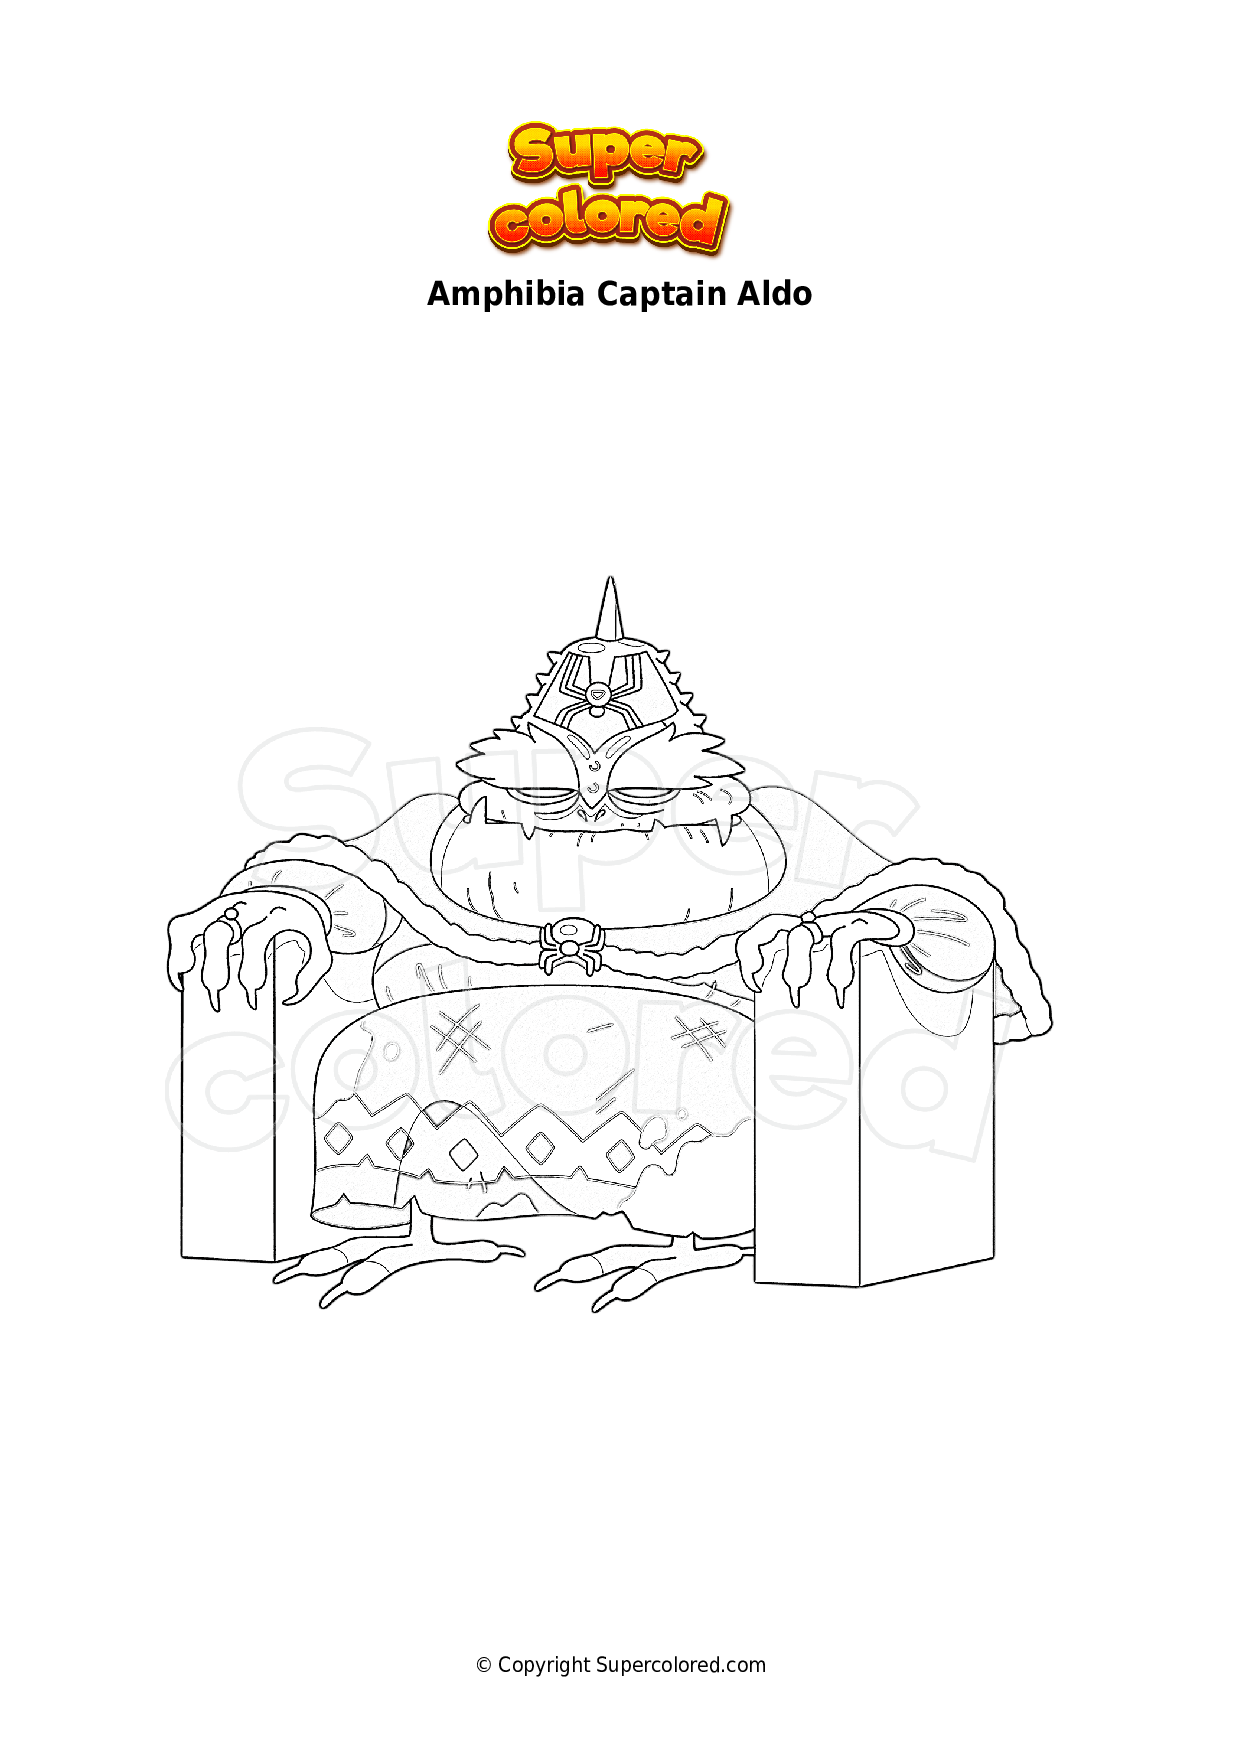 Ausmalbild Amphibia Captain Aldo - Supercolored.com